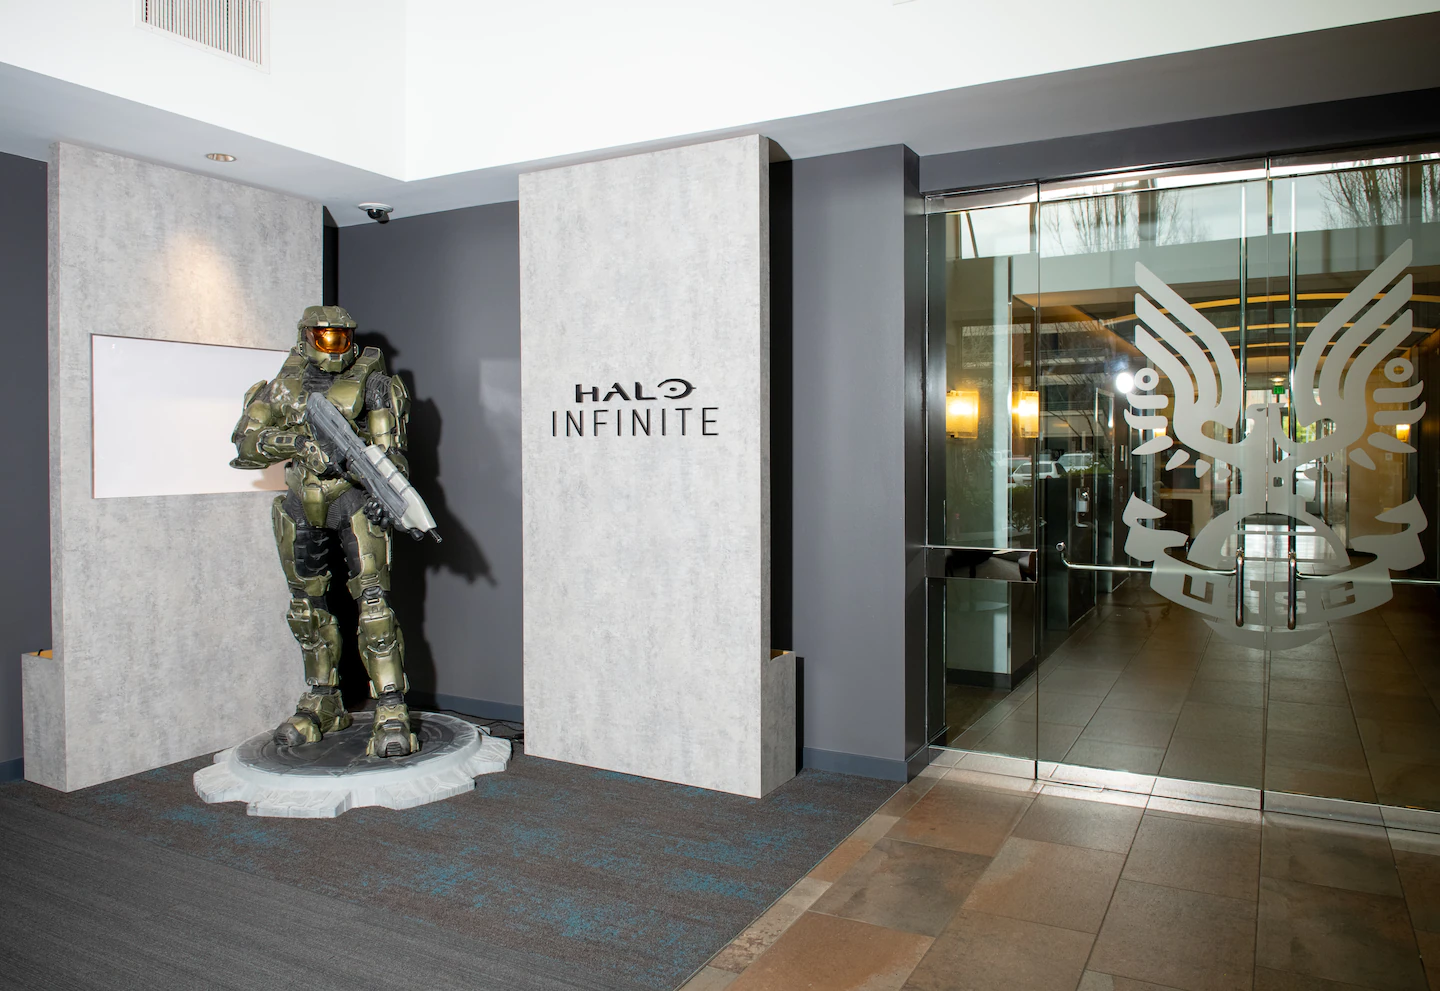 Inside ‘Halo’s’ universal aspirations